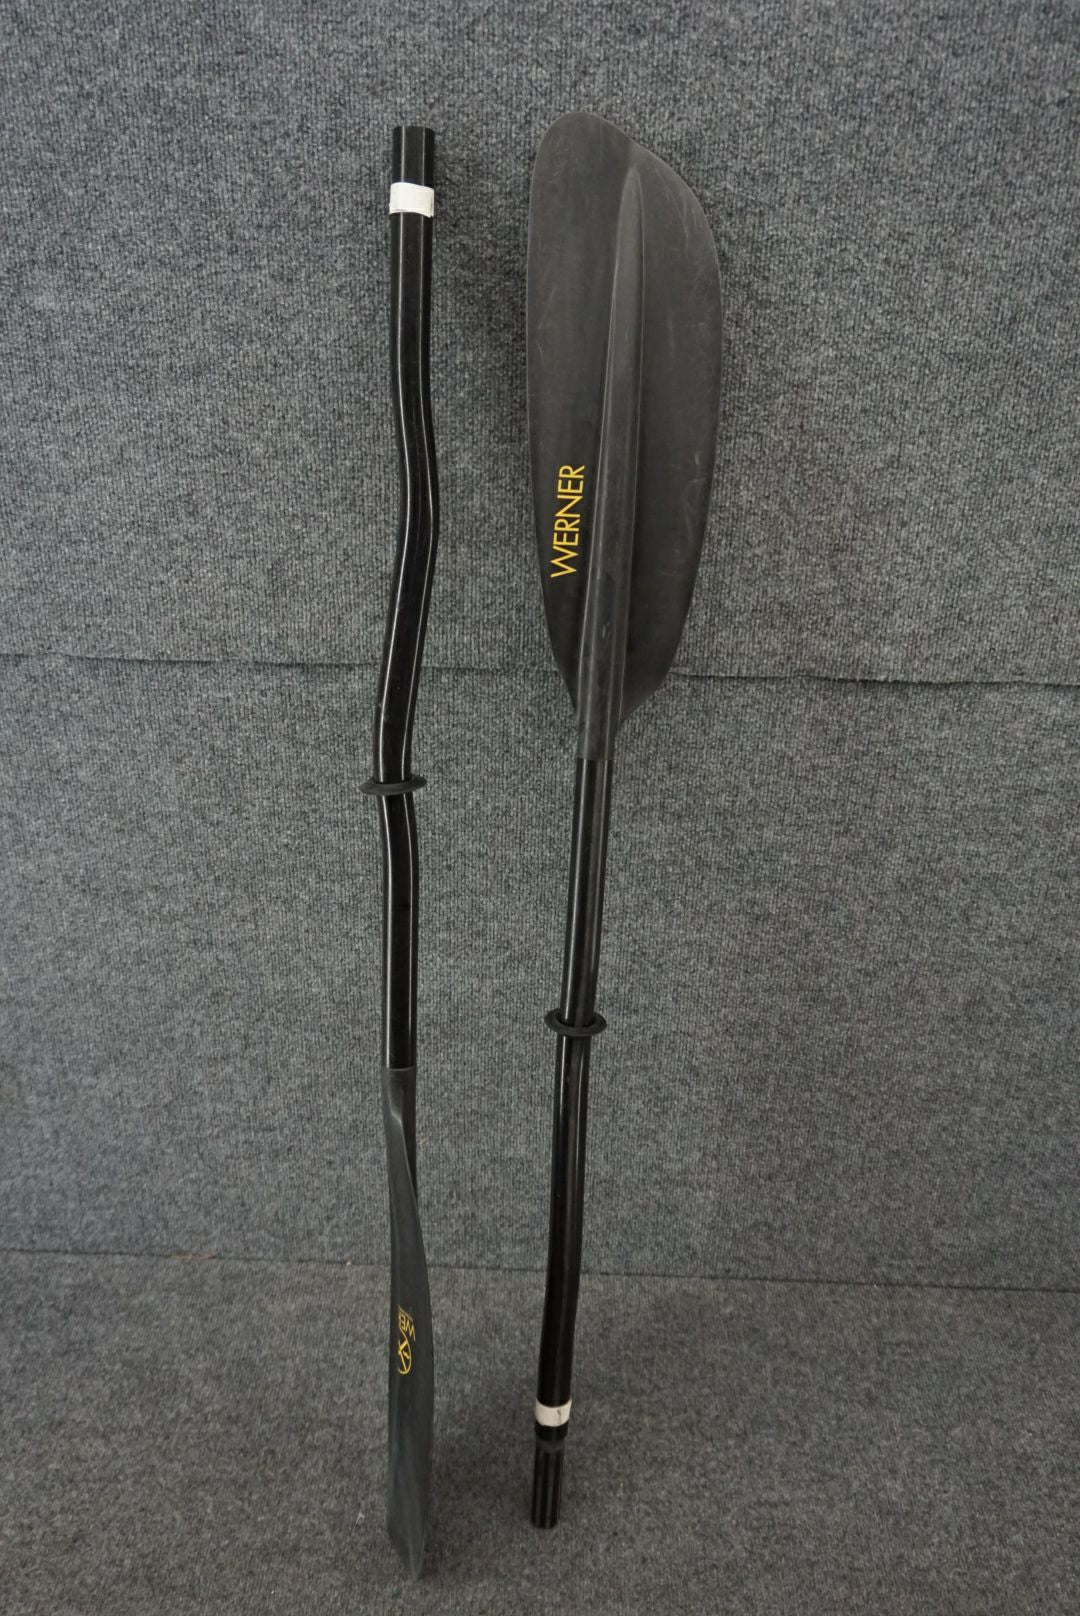 Werner Paddles Length 240 cm/94.5" Kayak Paddle